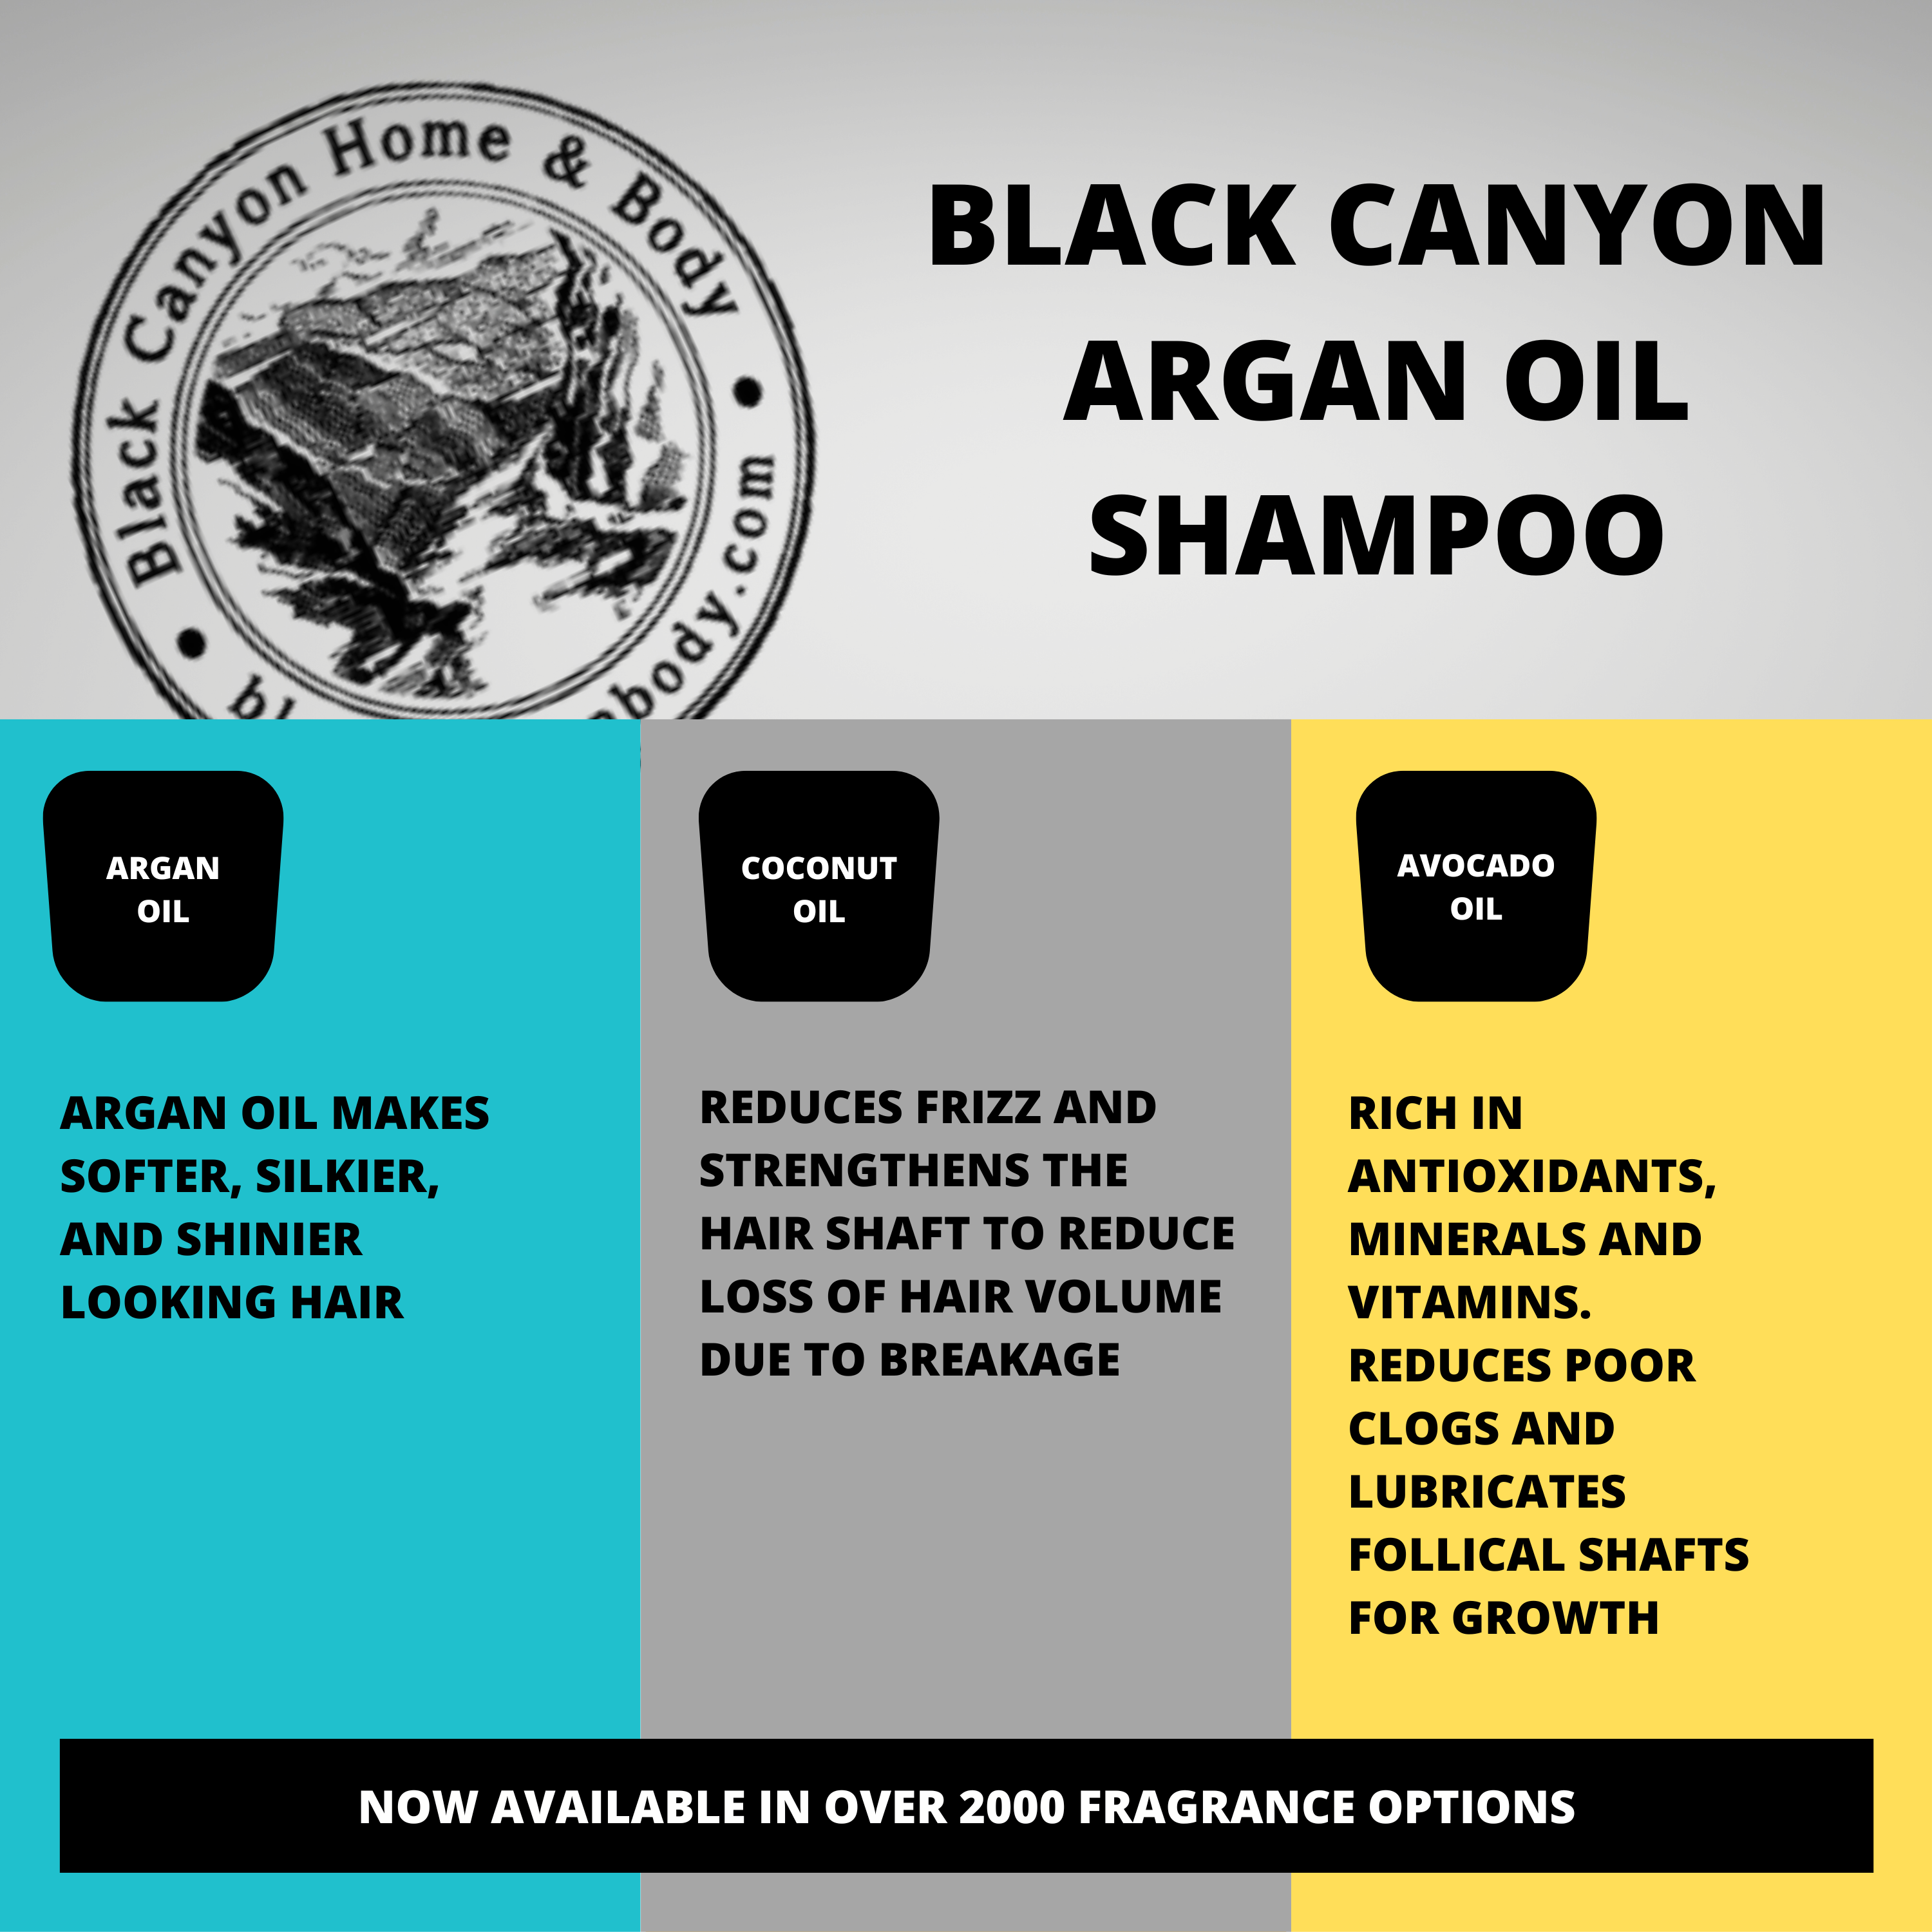 Black Canyon Lemon Tart Scented Shampoo with Argan Oil